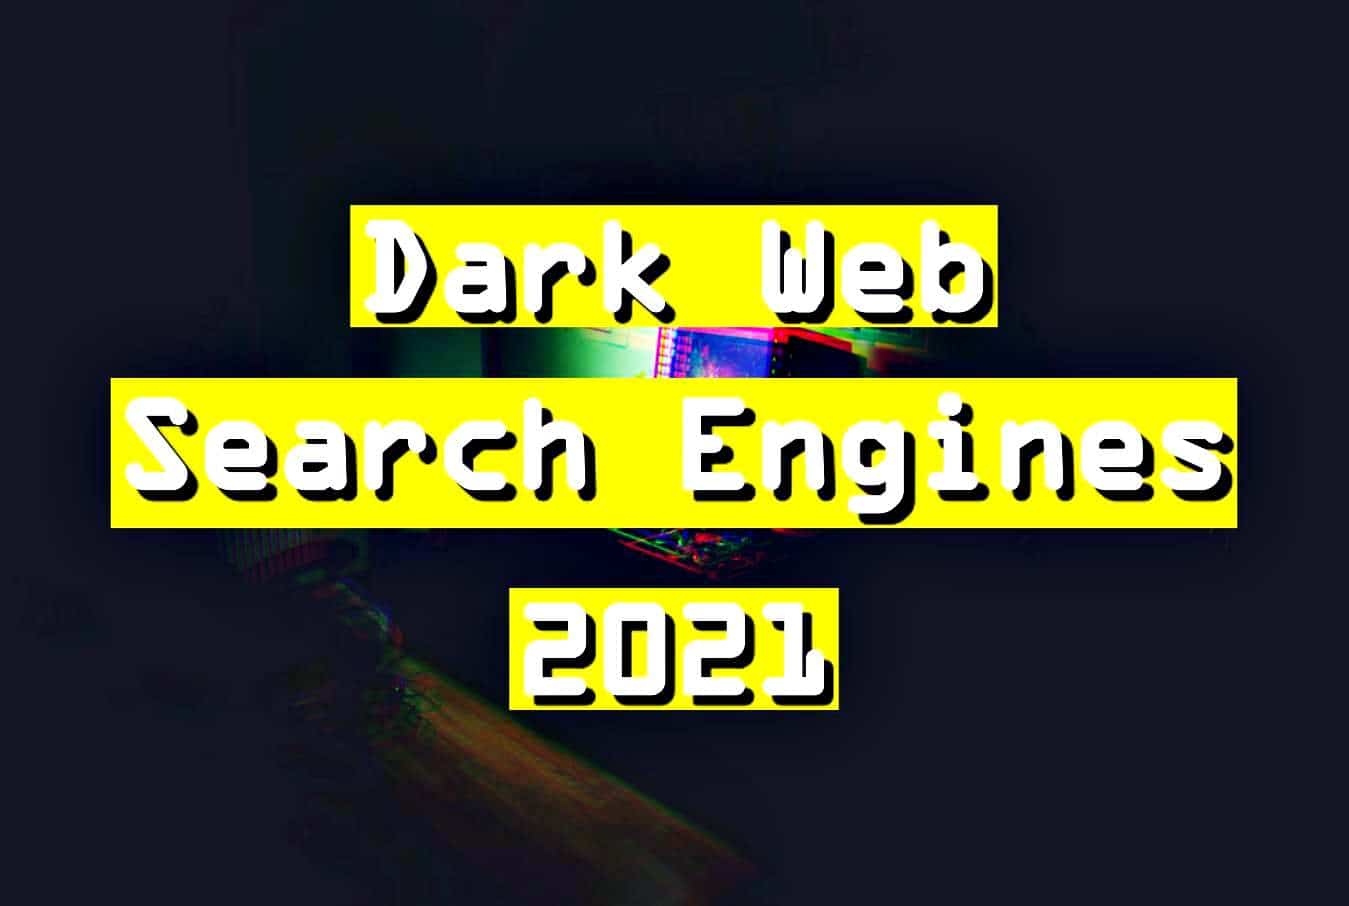 Dark Web Sites Links